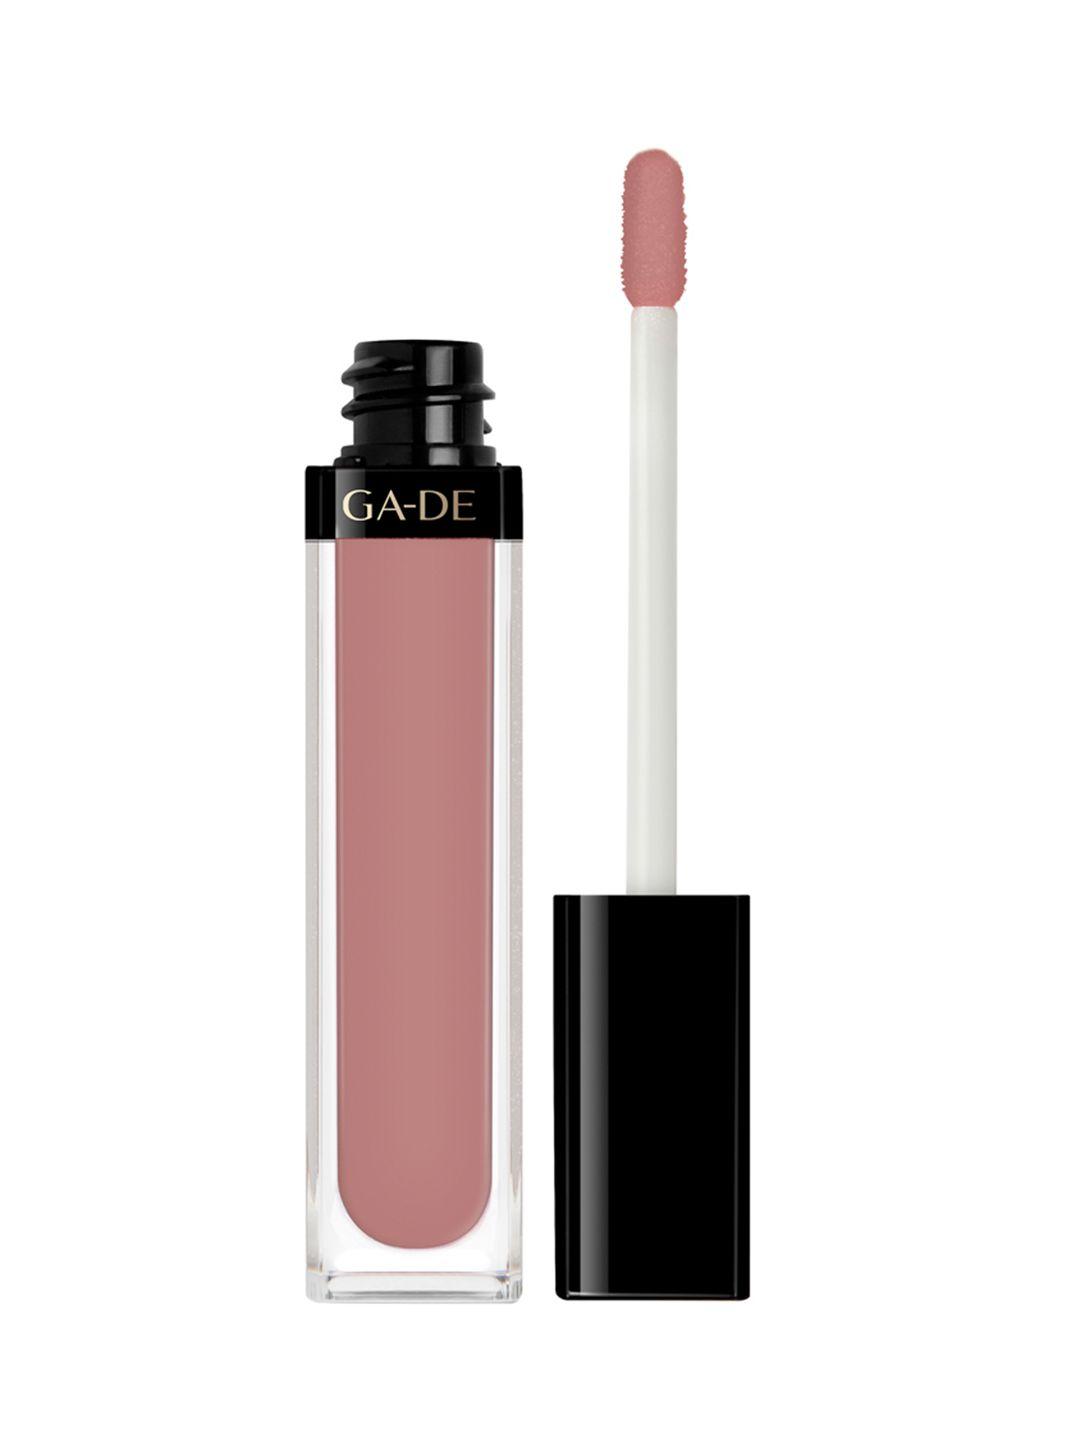 ga-de-long-lasting-&-moisturizing-crystal-lights-lip-gloss-6ml---marvellous-mauve-824